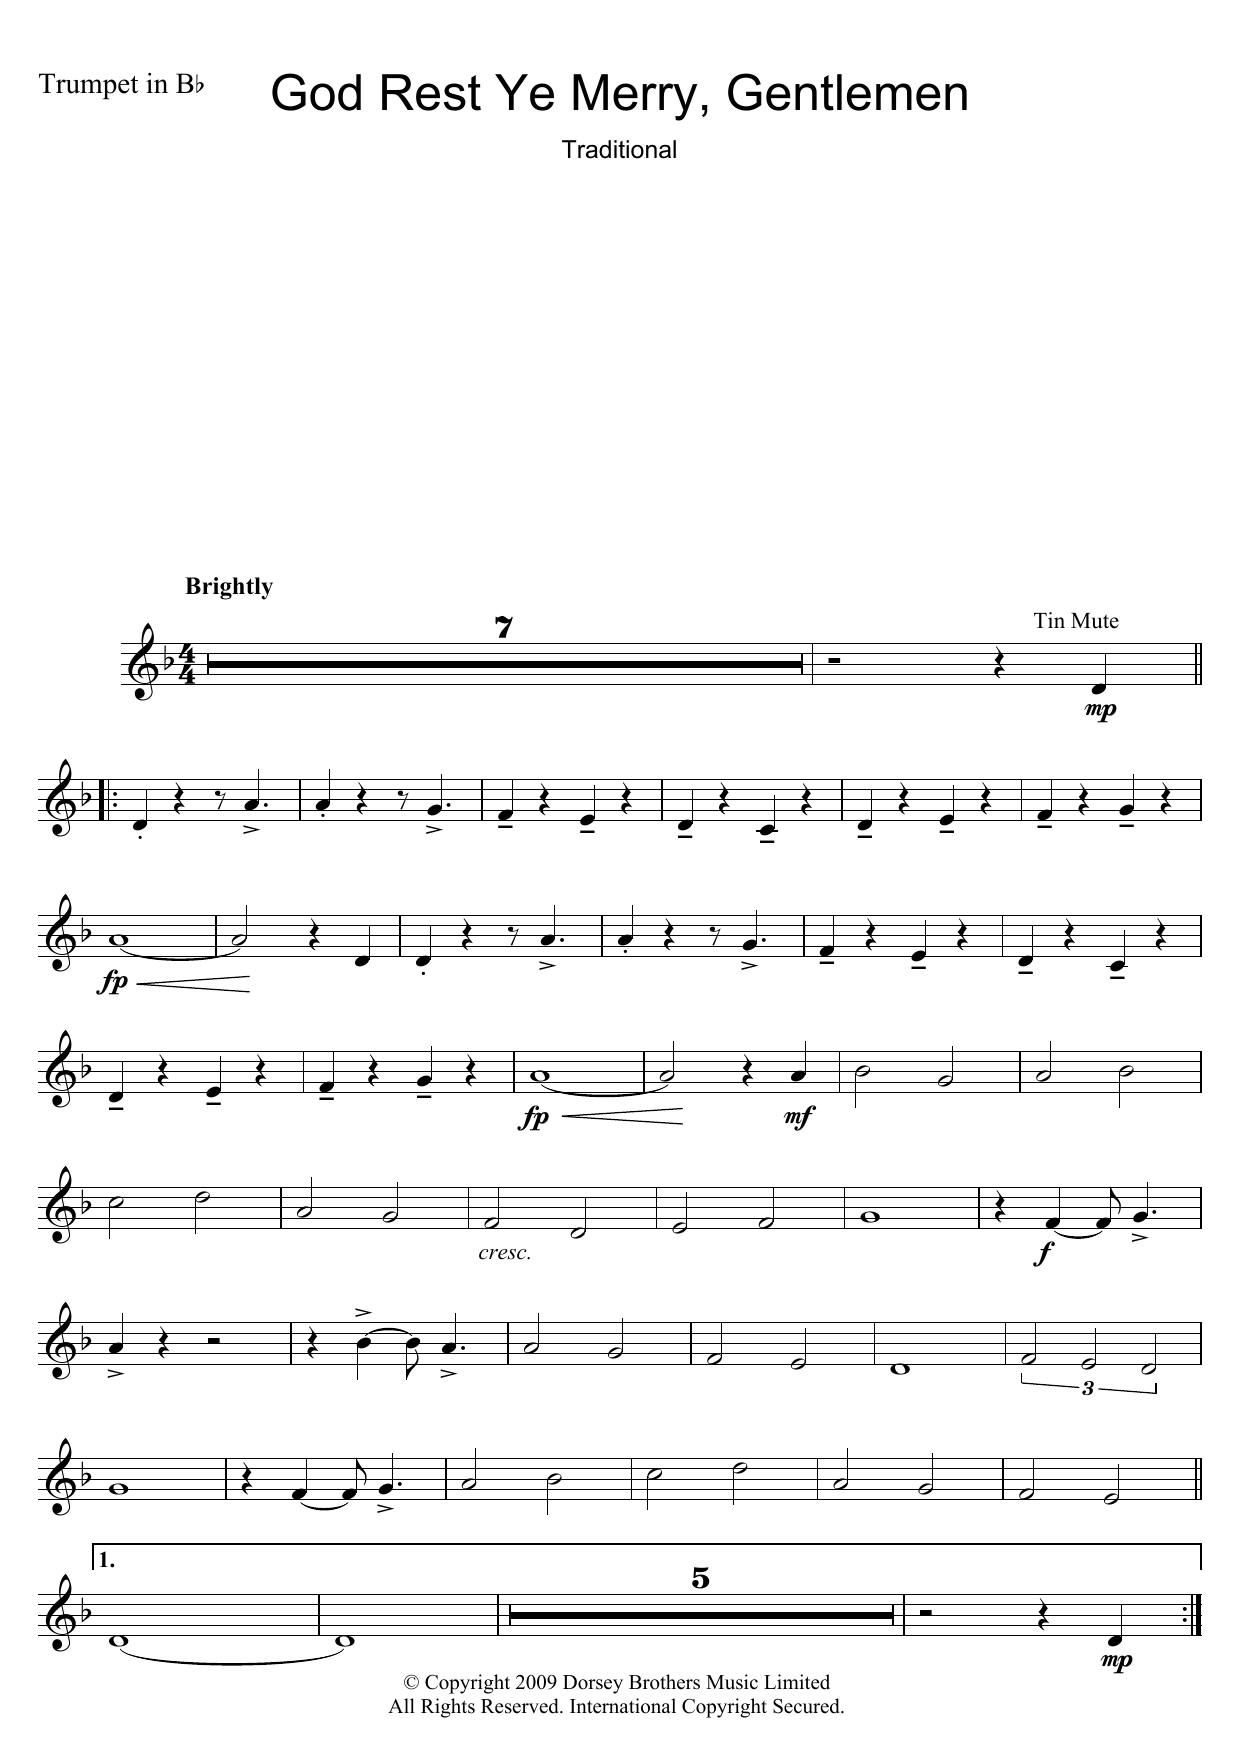 Traditional Carol God Rest Ye Merry, Gentlemen Sheet Music Notes & Chords for Trumpet - Download or Print PDF